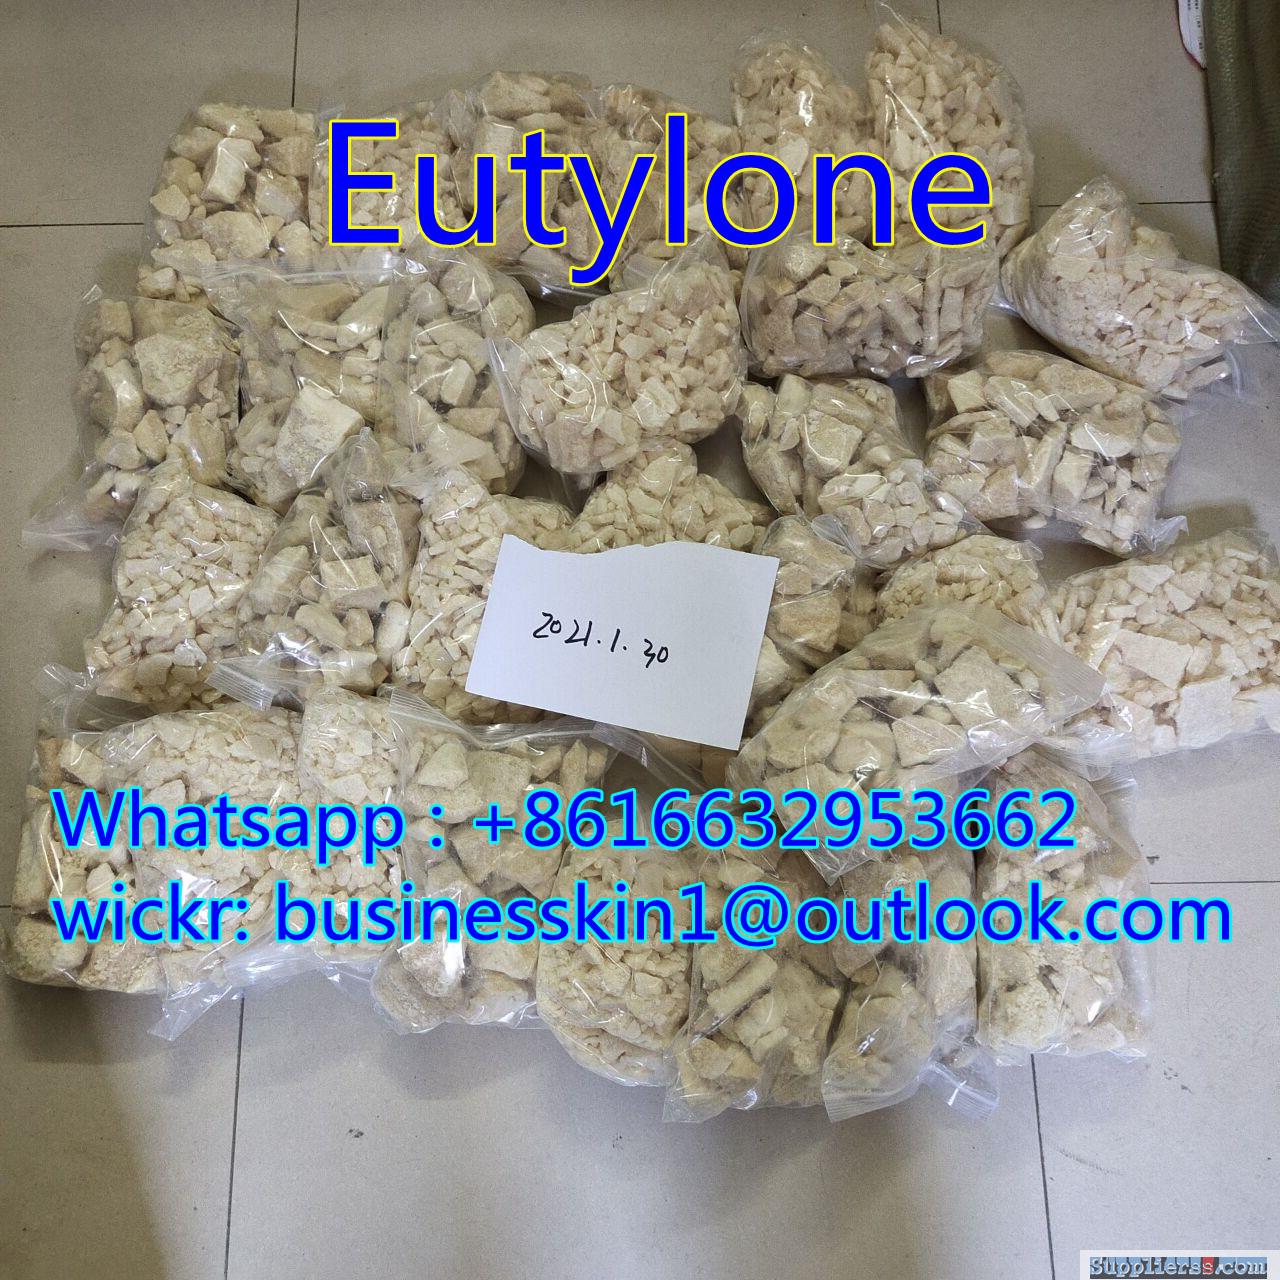 Eutylone supplier from China eutylone crystals for sale , buy eutylone online Whatsapp +86